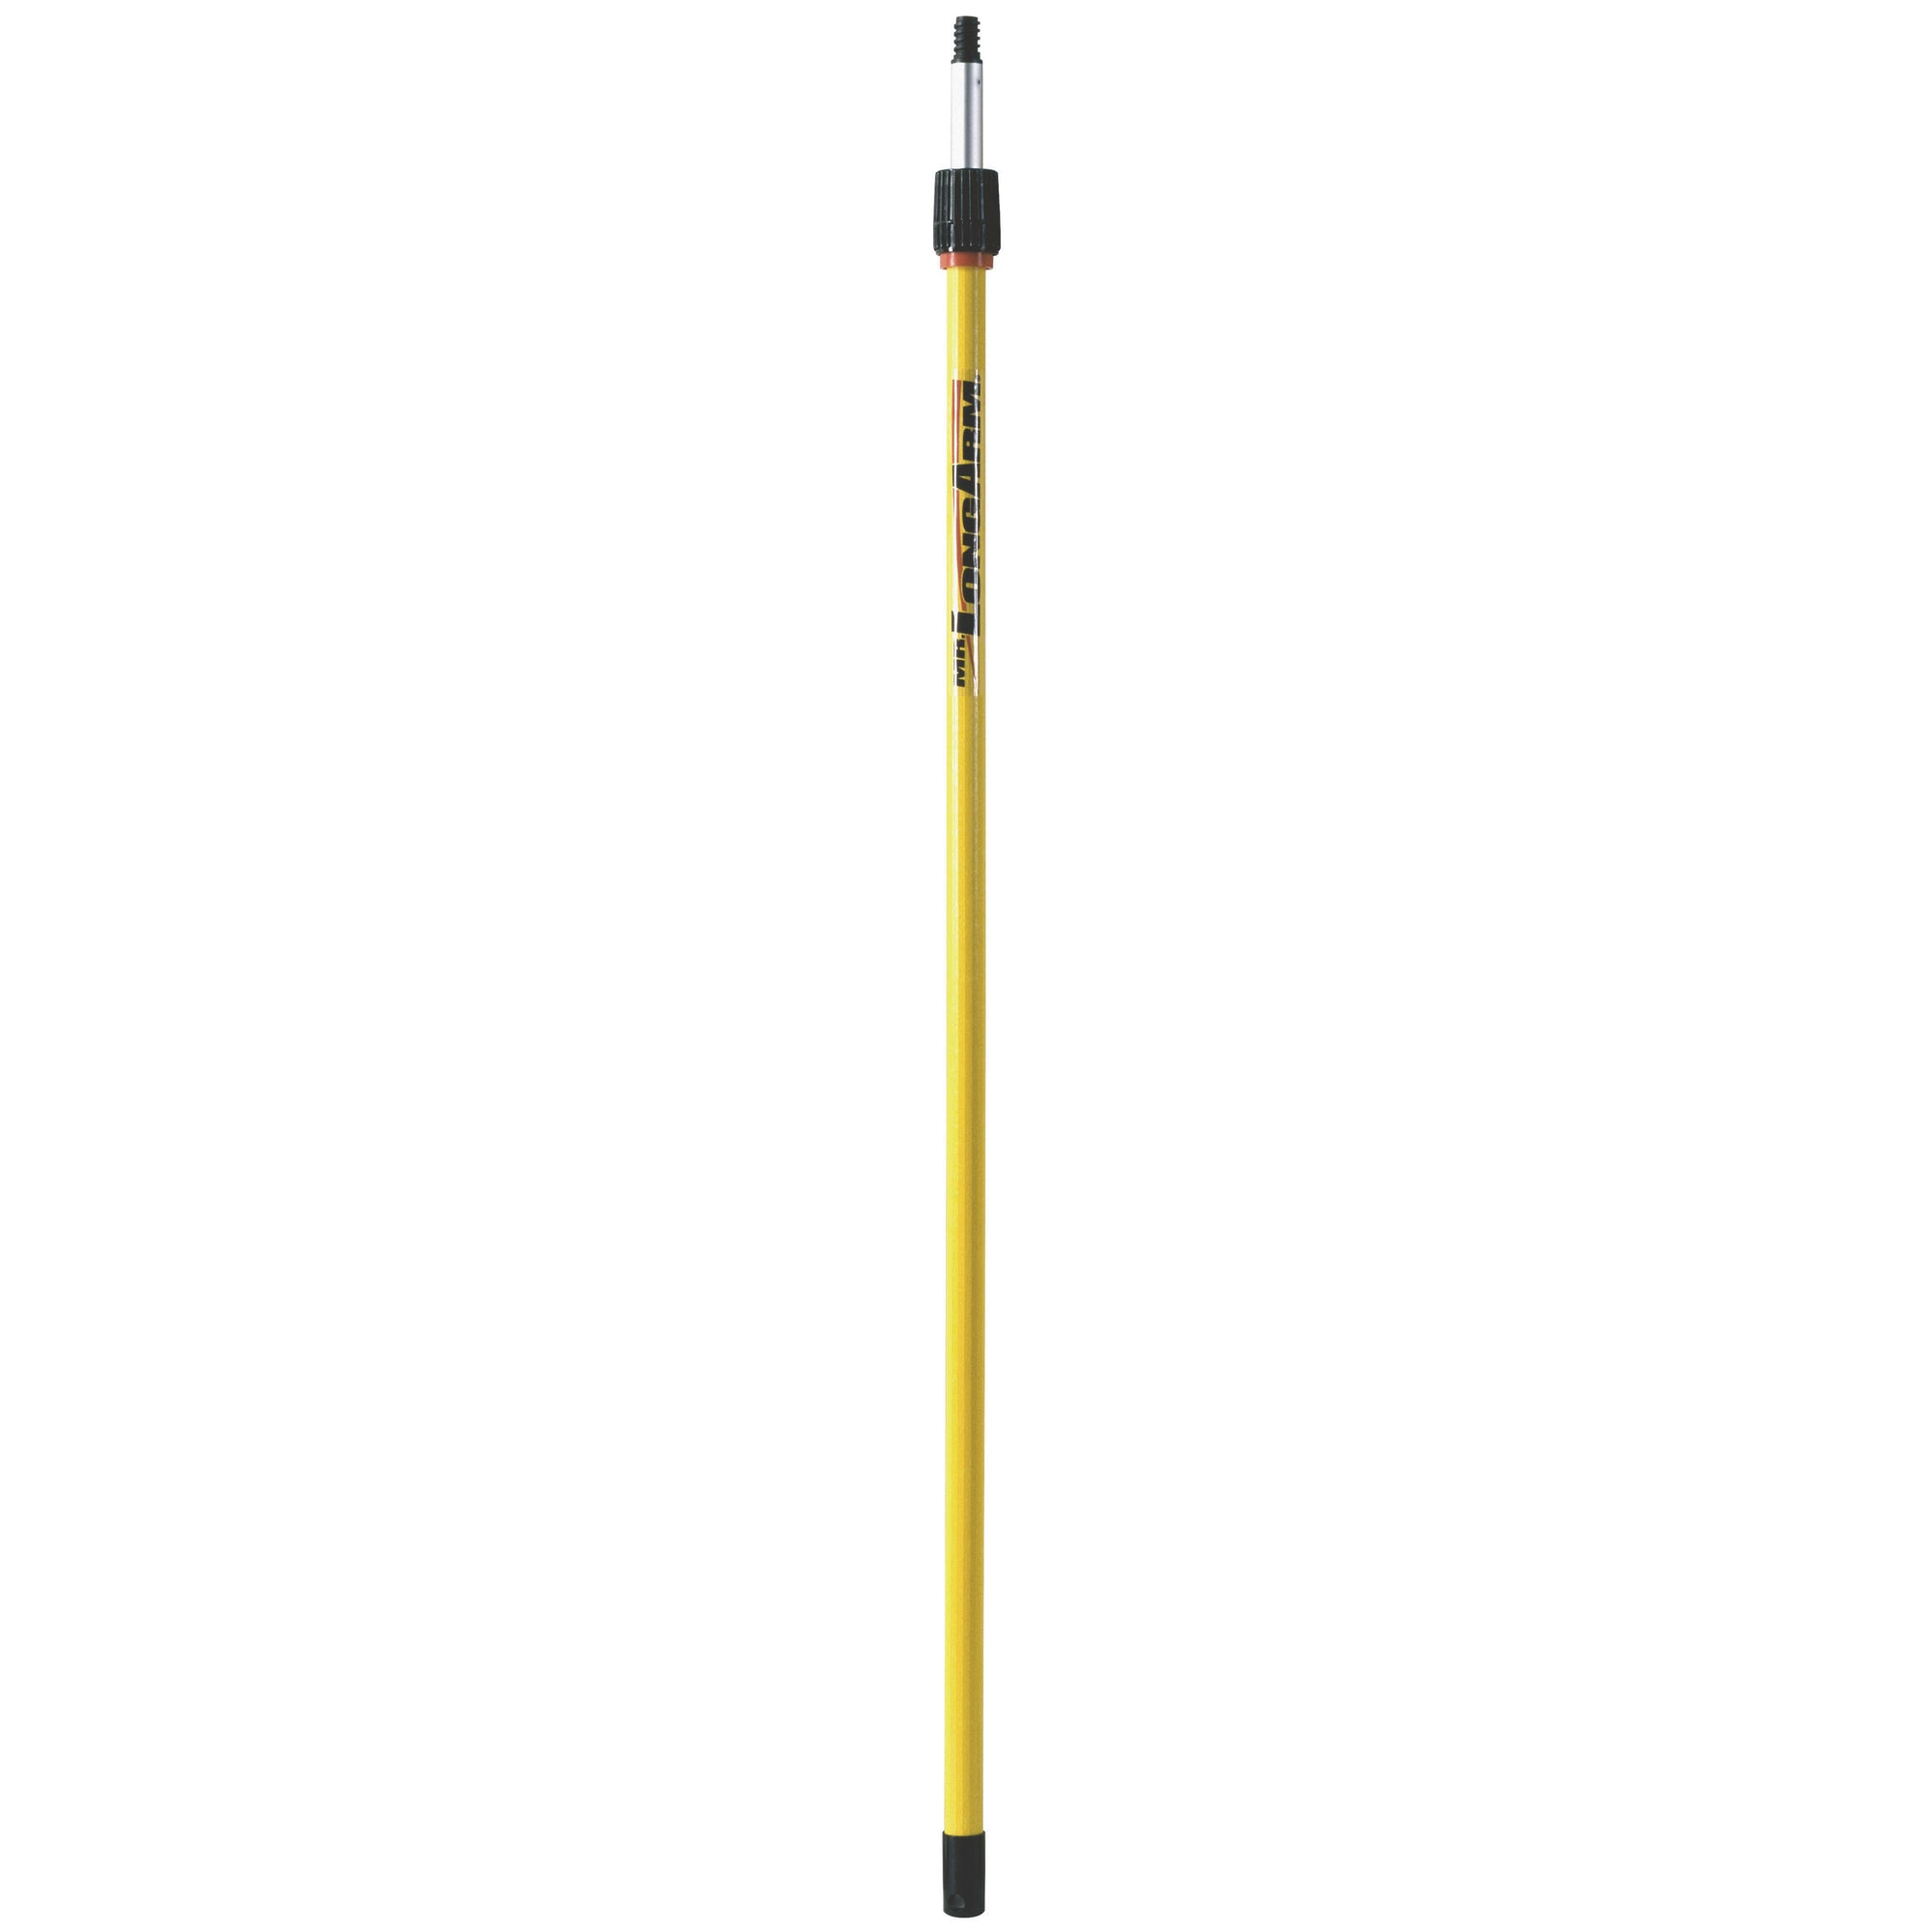 Mr. LongArm 3206 ProPole Medium Duty Extension Pole - 3.2' to 5.2'